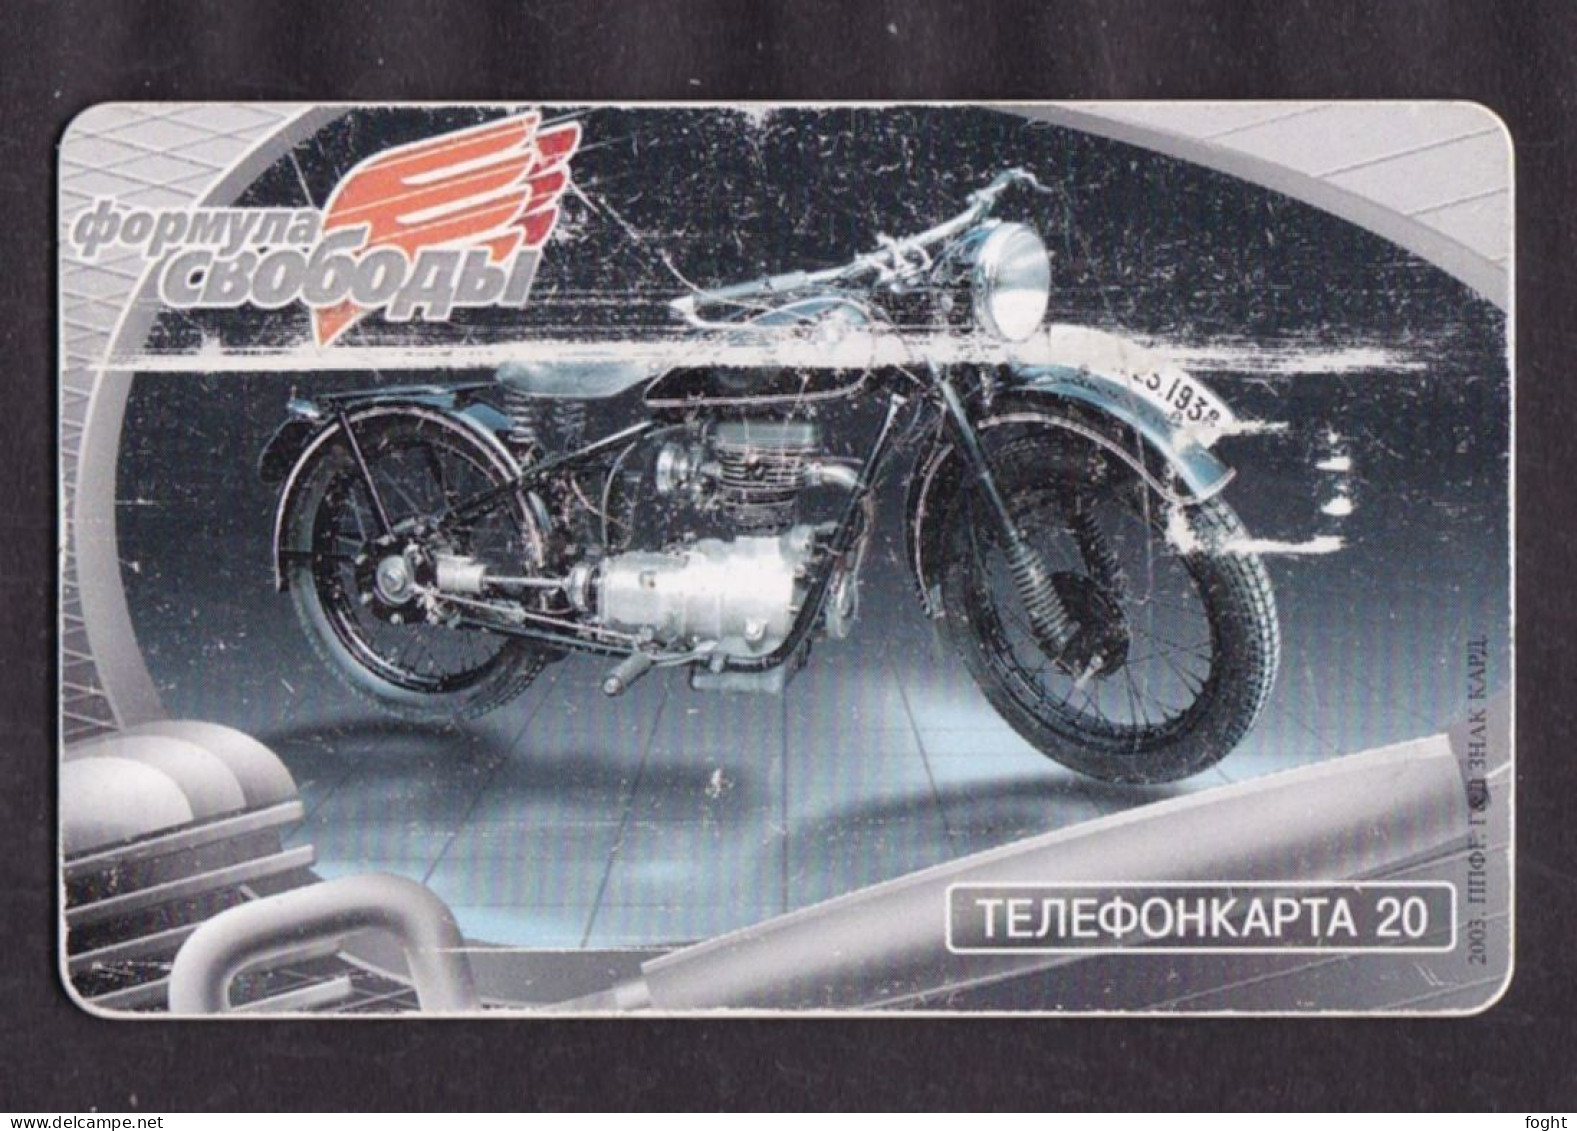 2003 Russia.Phonecard › Formula Of Freedom. 1938g.  ,20 Units,Col:RU-MG-TS-0397 - Rusia